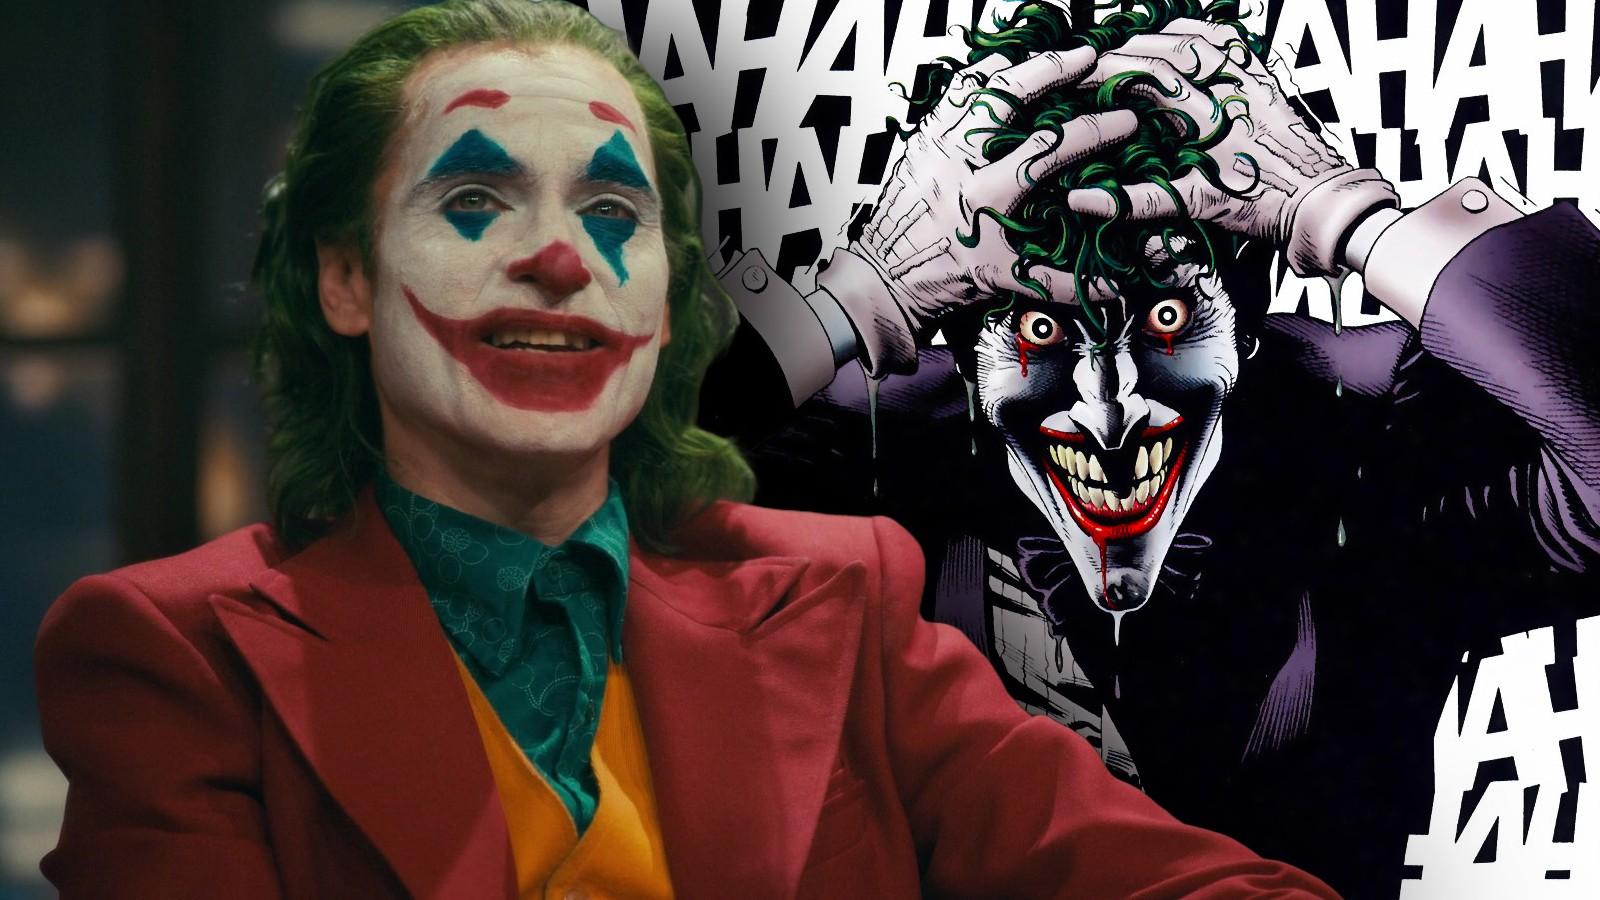 Joaquin Phoenix as the Joker and a still from The Killing Joke